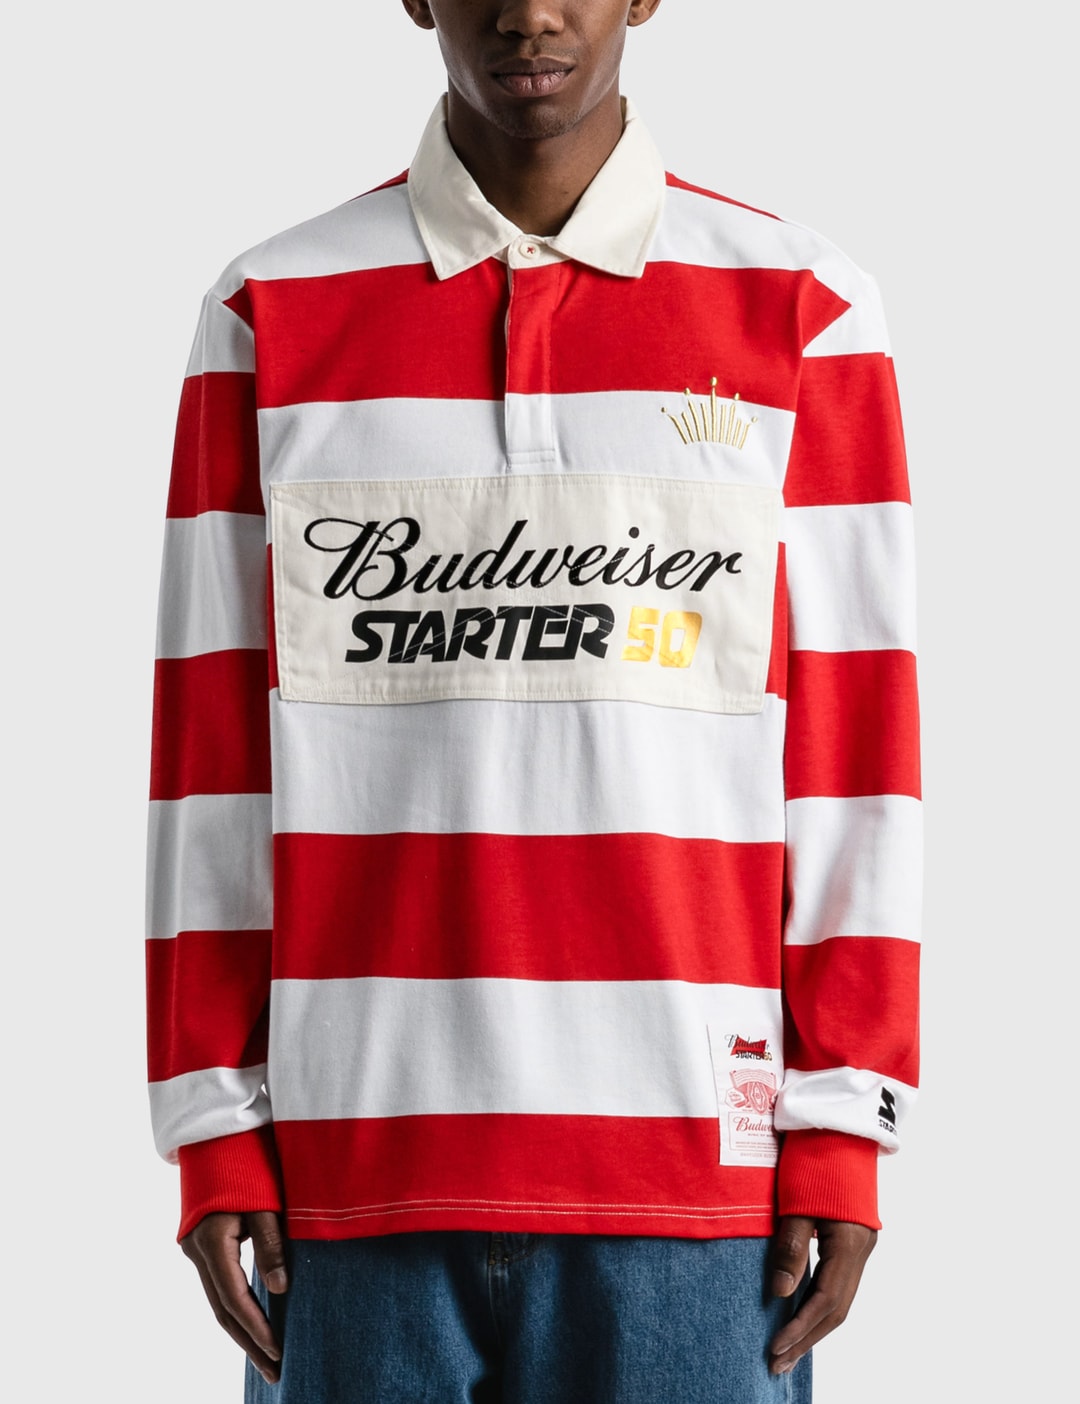 Budweiser x Starter Varsity Stripe Rugby Shirt Placeholder Image